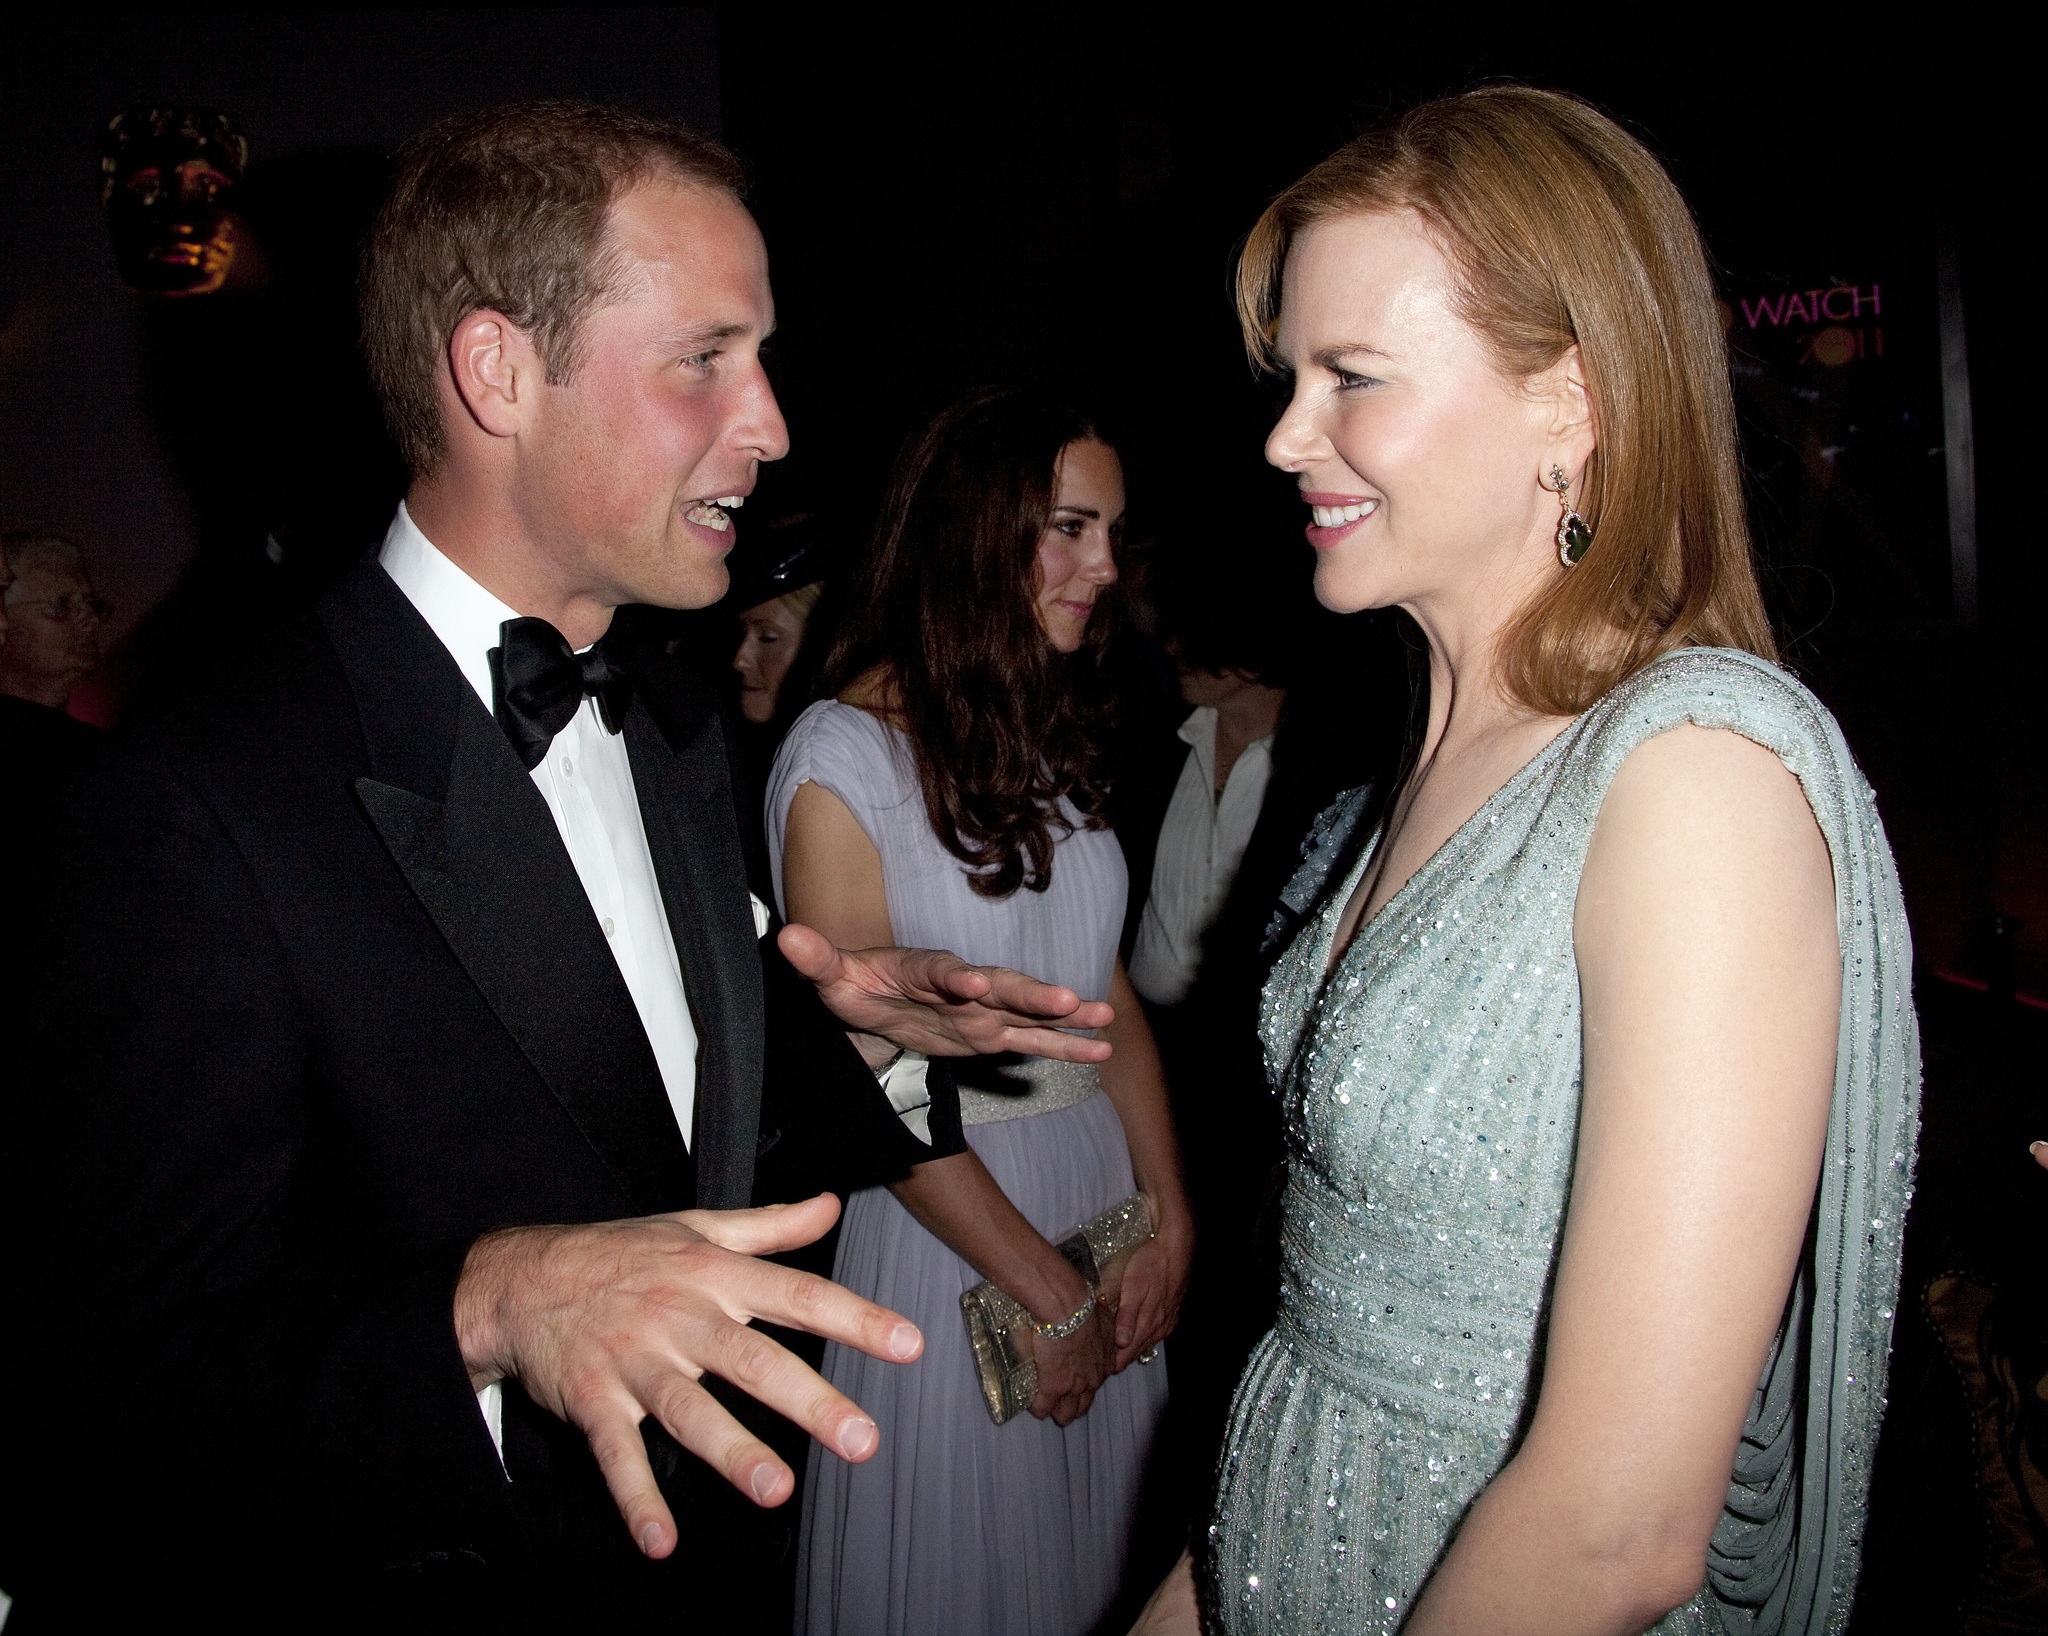 Nicole Kidman and Prince William